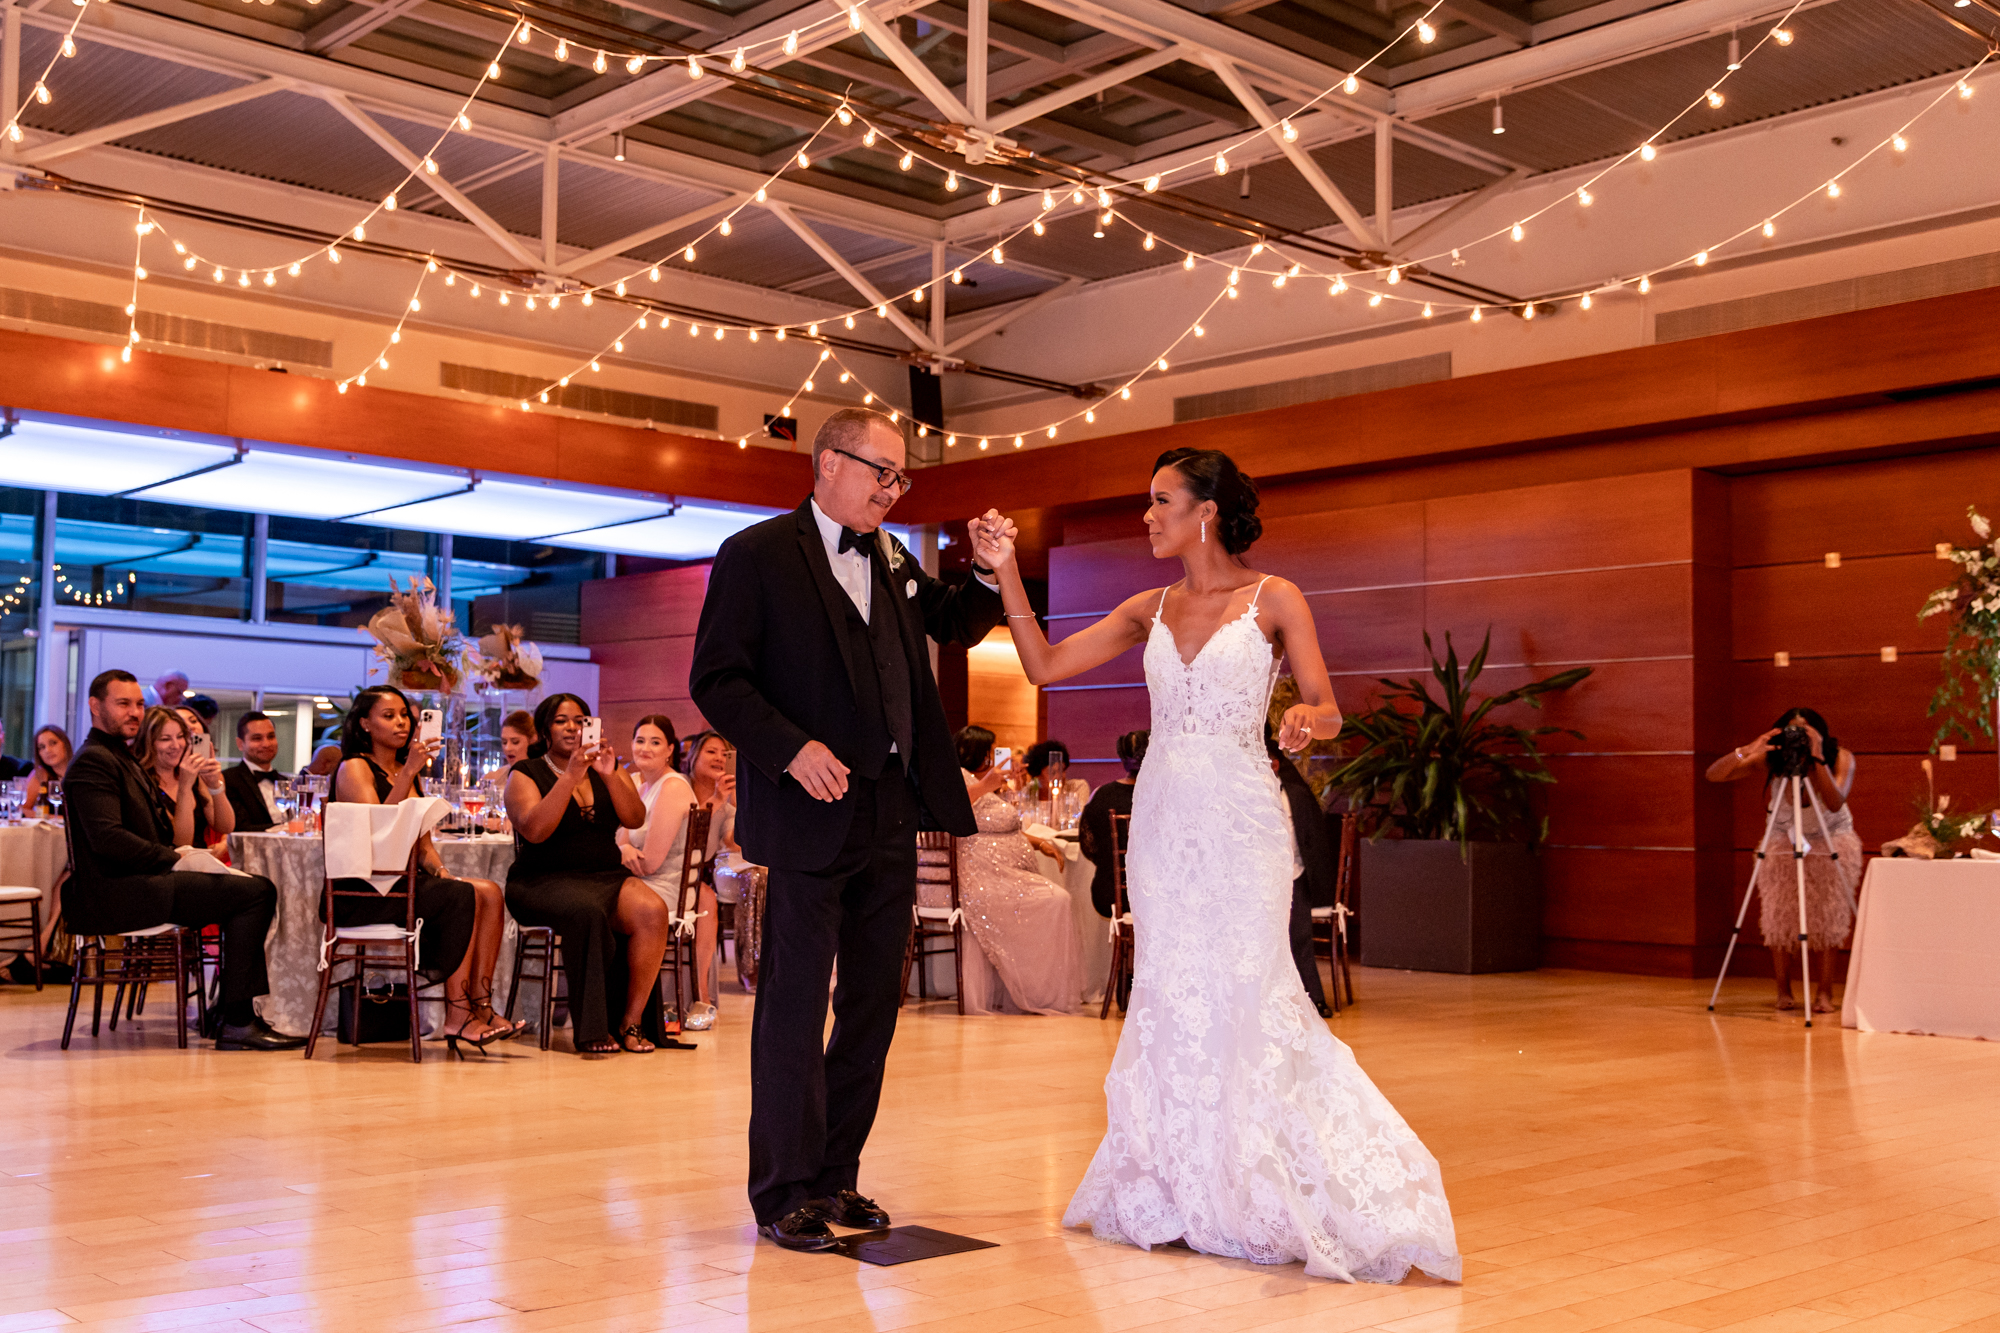 father daughter dance at a kimmel center wedding reception